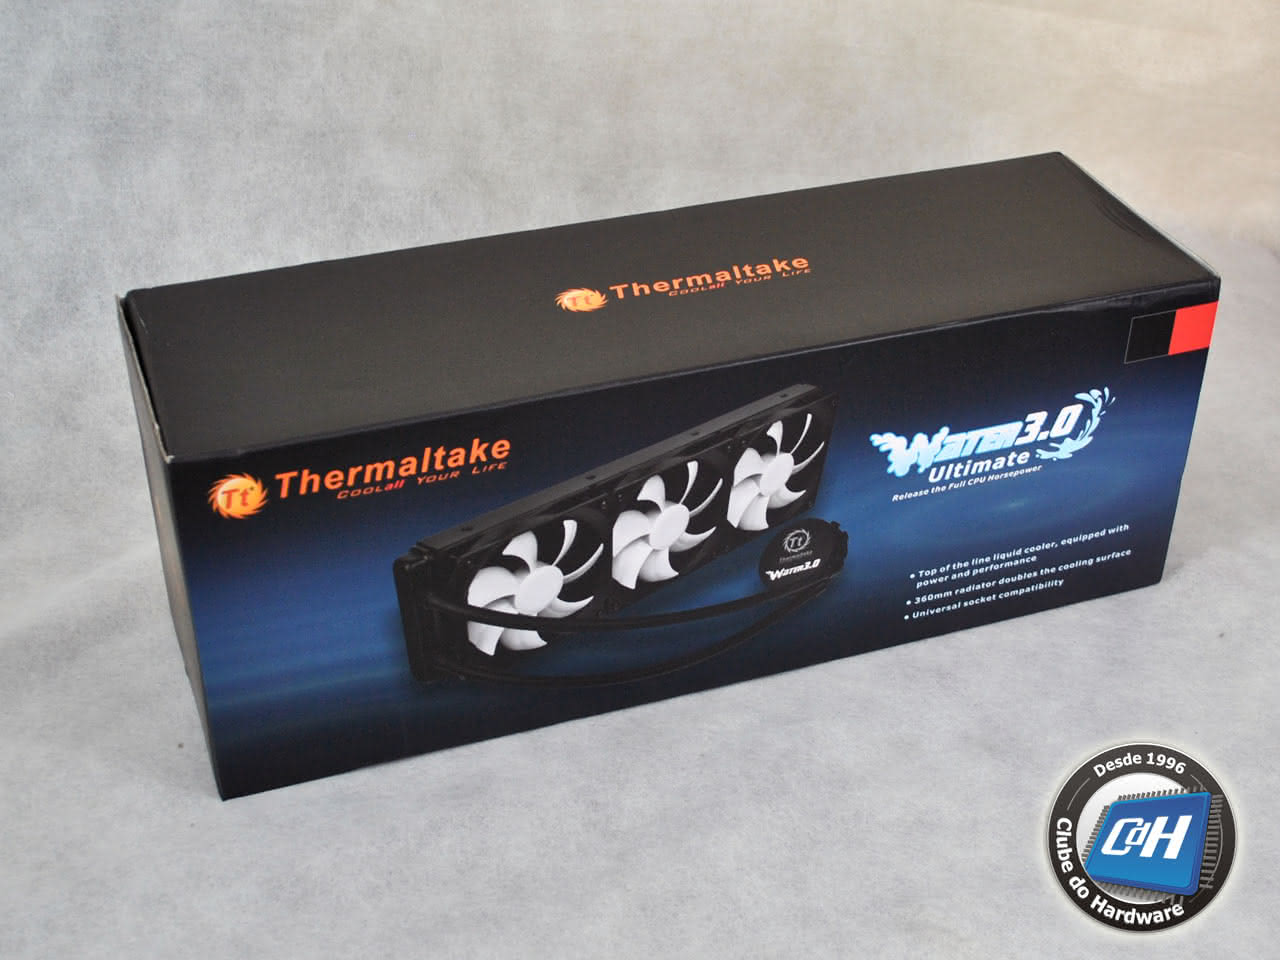 Teste do cooler Thermaltake Water 3.0 Ultimate